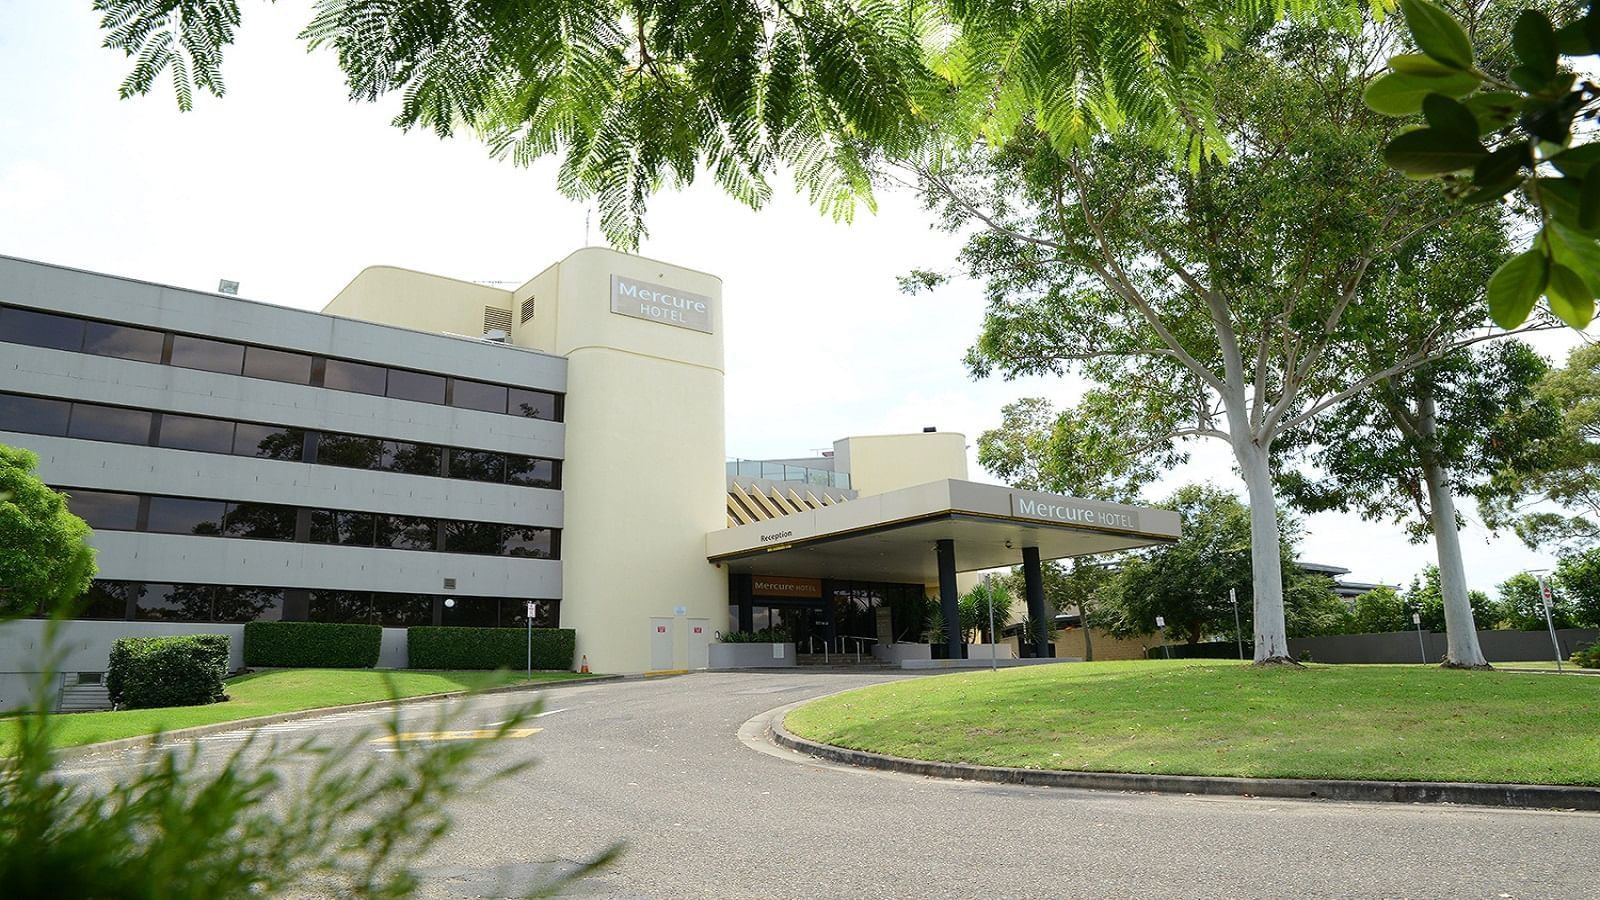 Exterior view of Mercure Penrith Hotel Australia